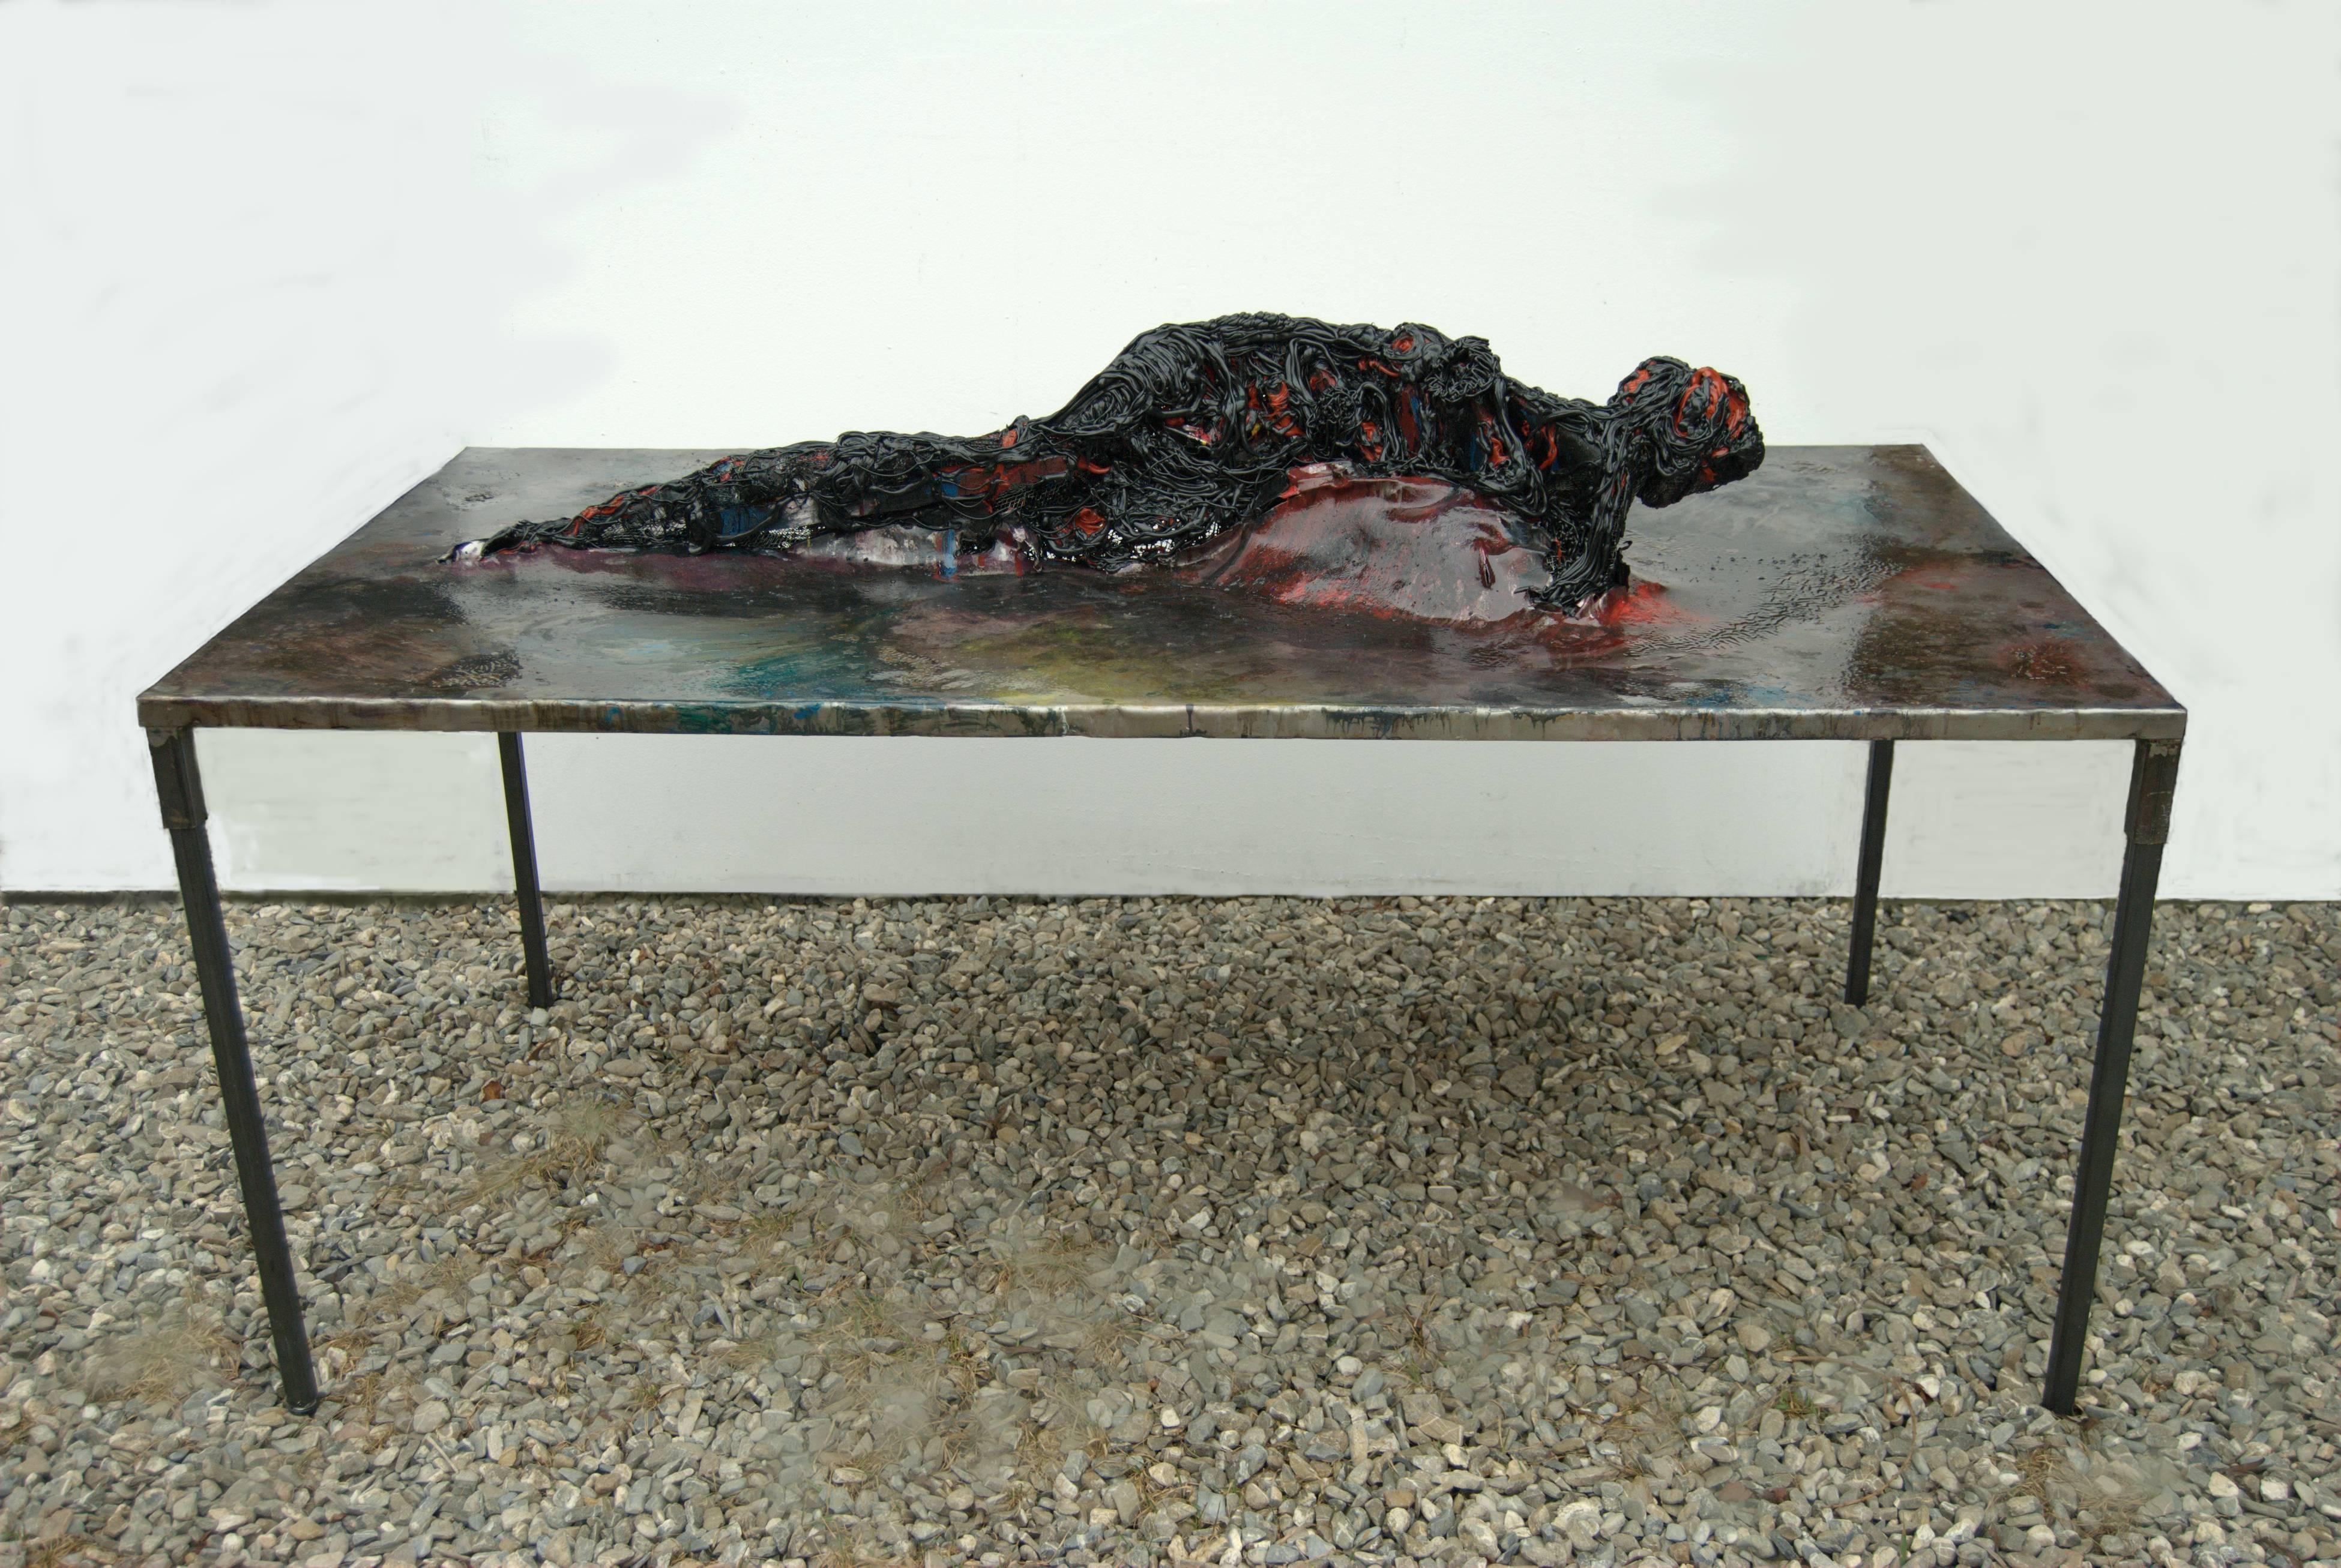 Zsolt Berszán Figurative Sculpture - Untitled 06 - 21st Century, Sculpture, Installation Art, Organic, Black, Metal